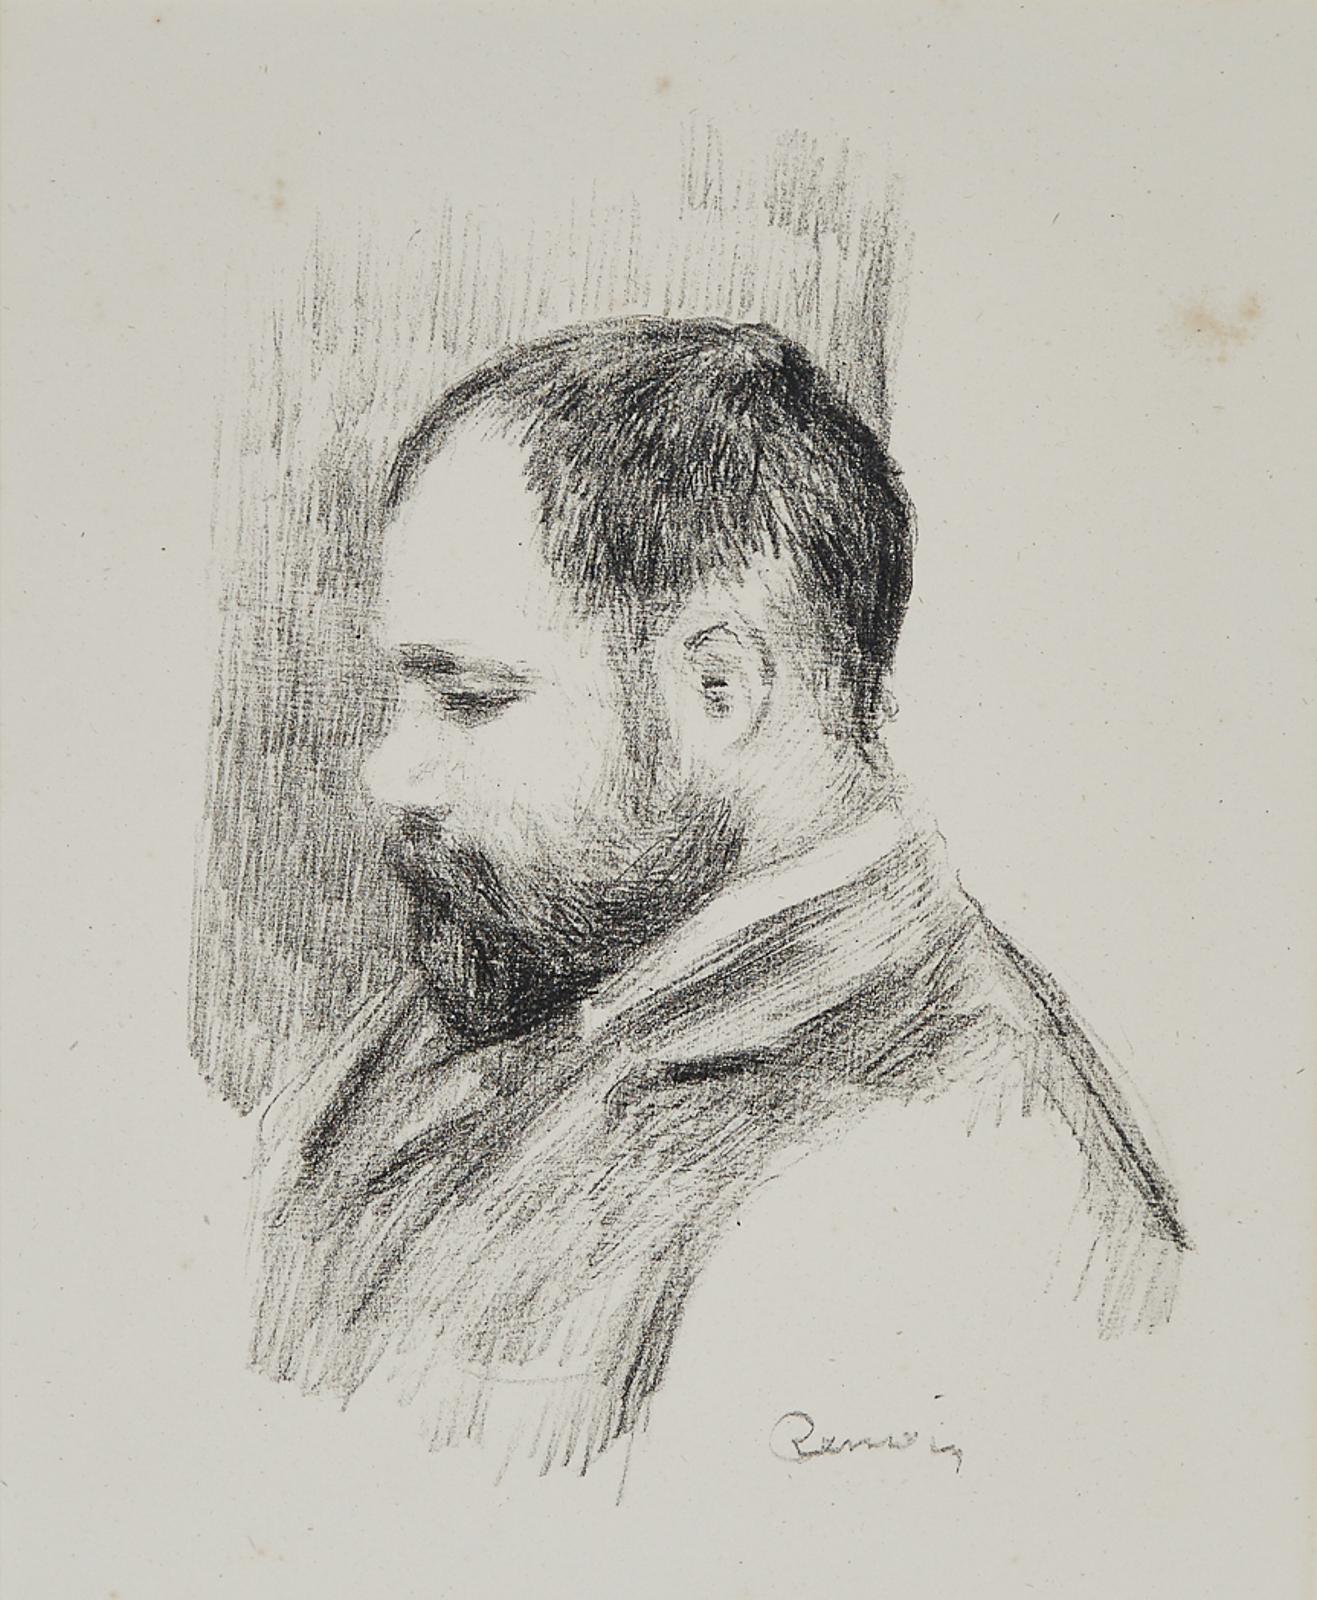 Pierre-Auguste Renoir (1841-1919) - Ambroise Vollard (From Douze Lithographies Originales), 1904 [delteil, 37; Stella, 37]